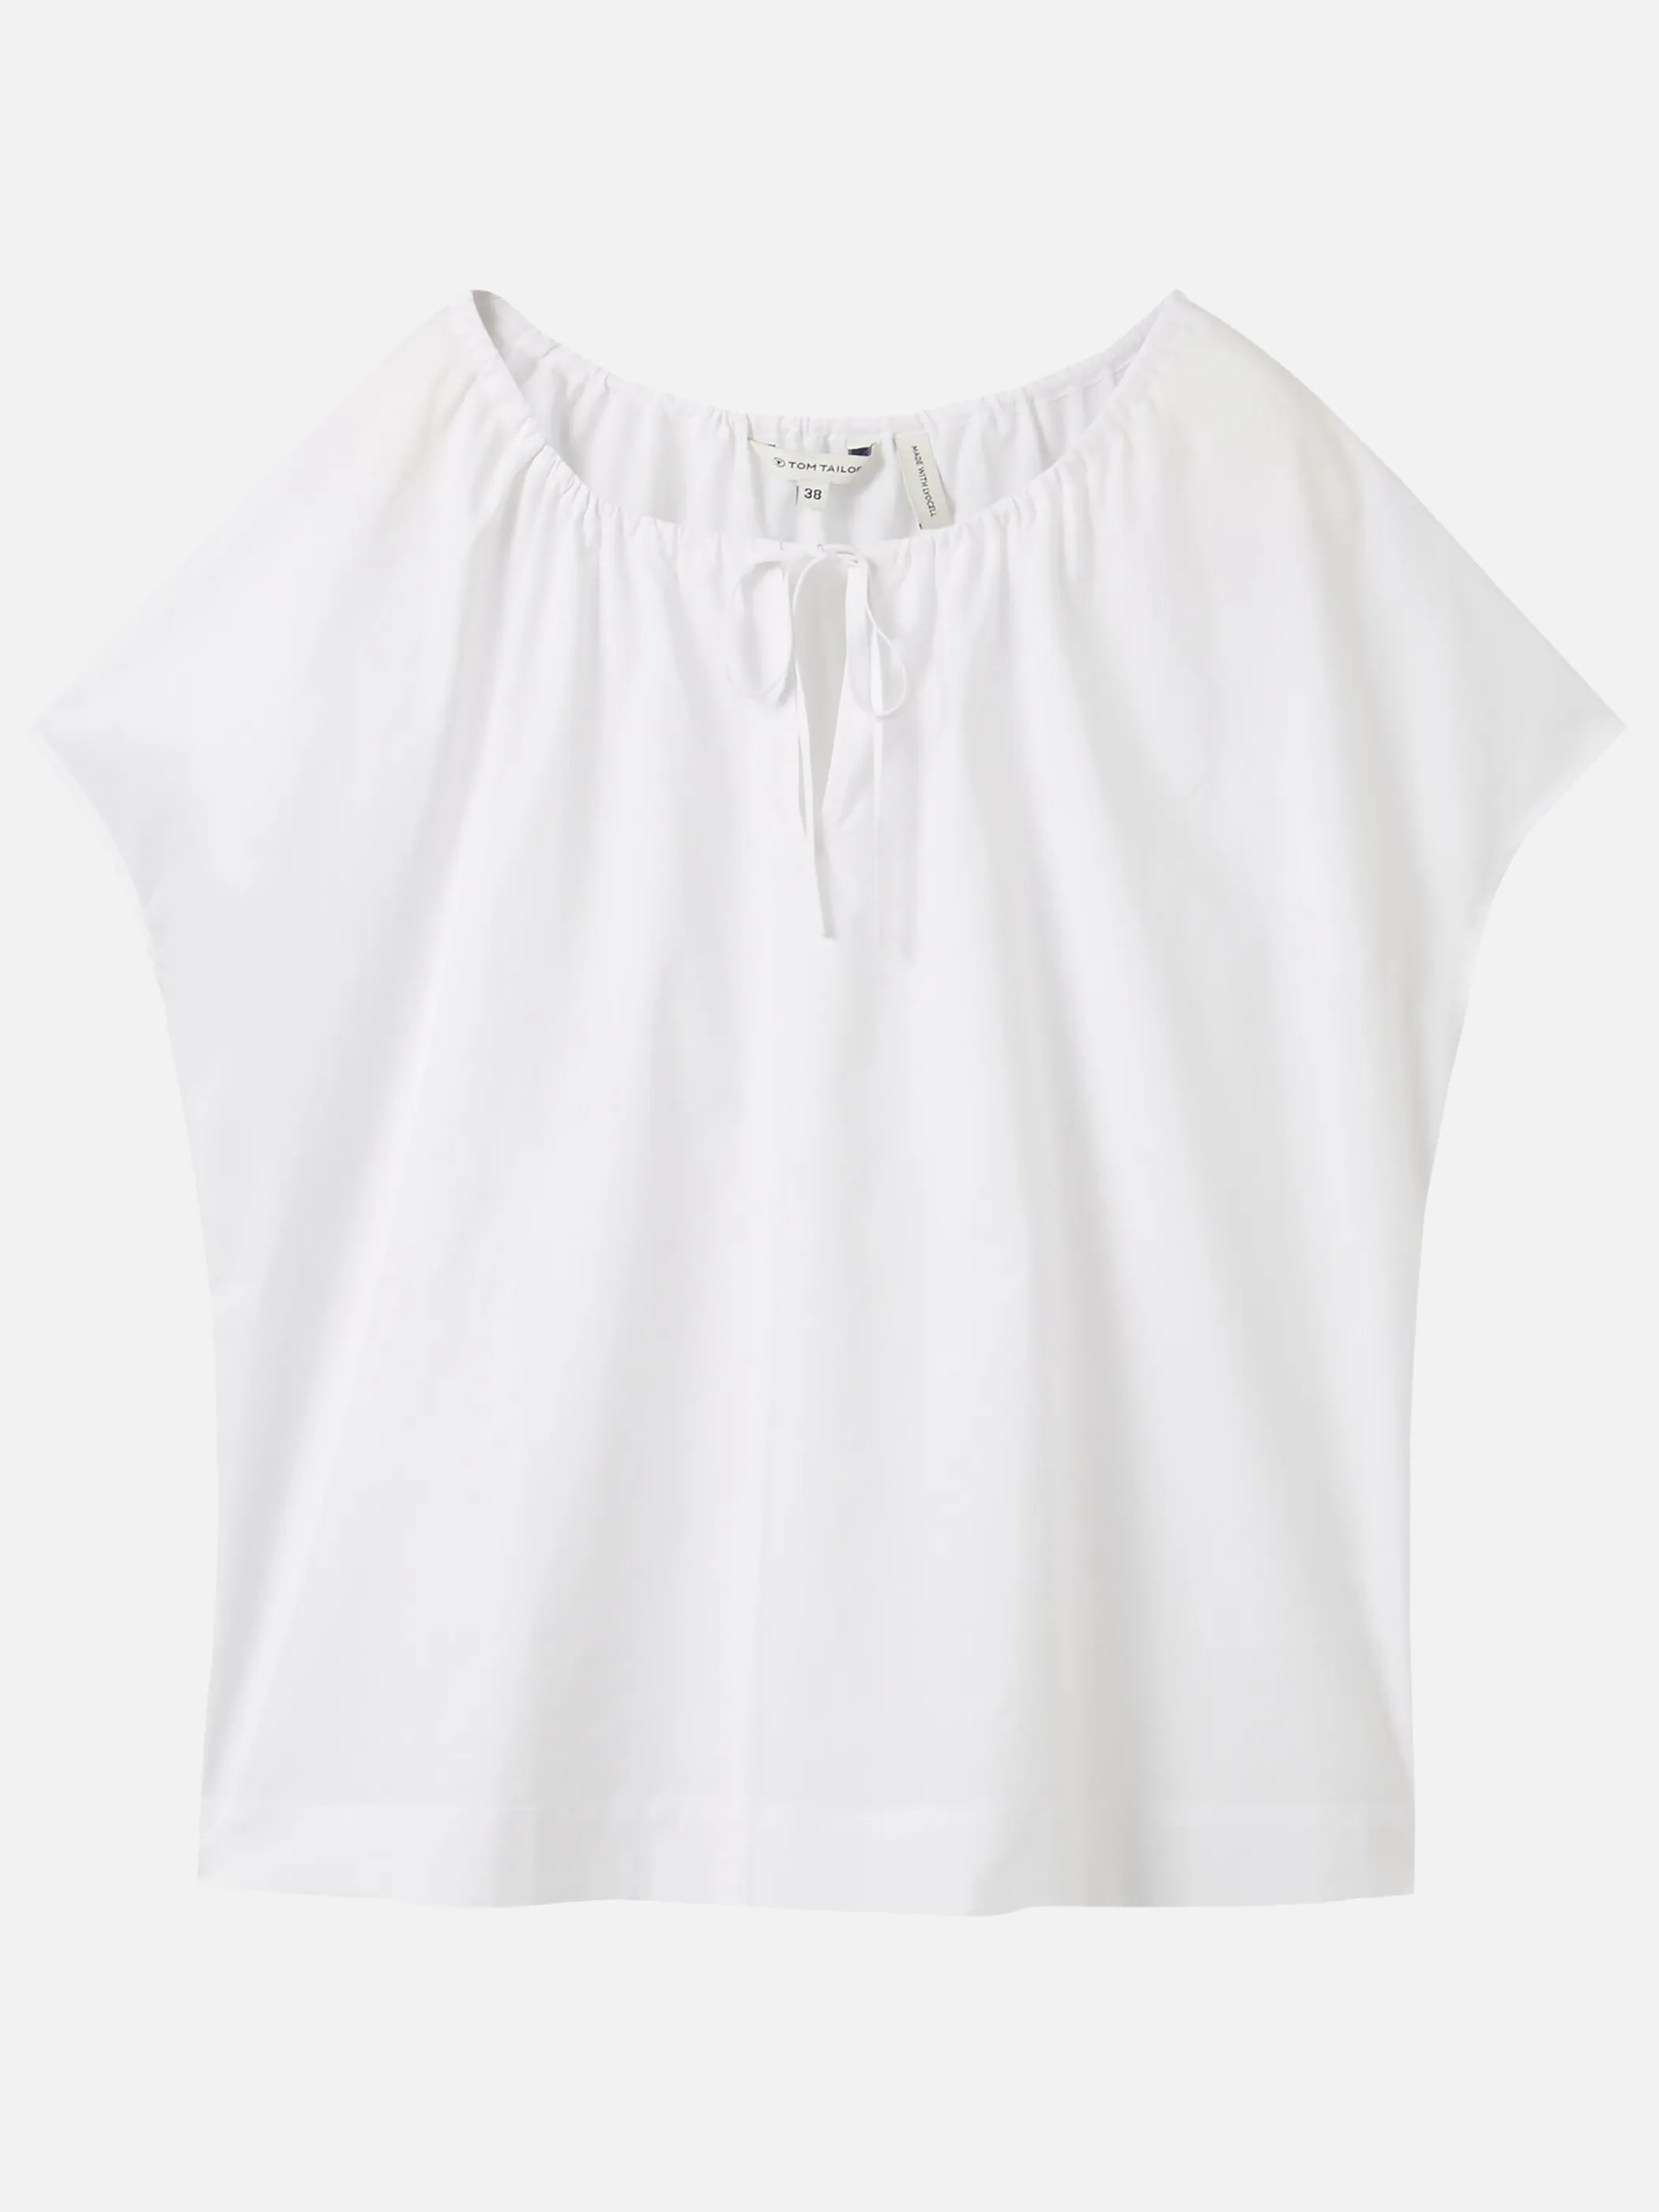 Tom Tailor 1040322 feminine solid blouse Weiß 890603 20000 1